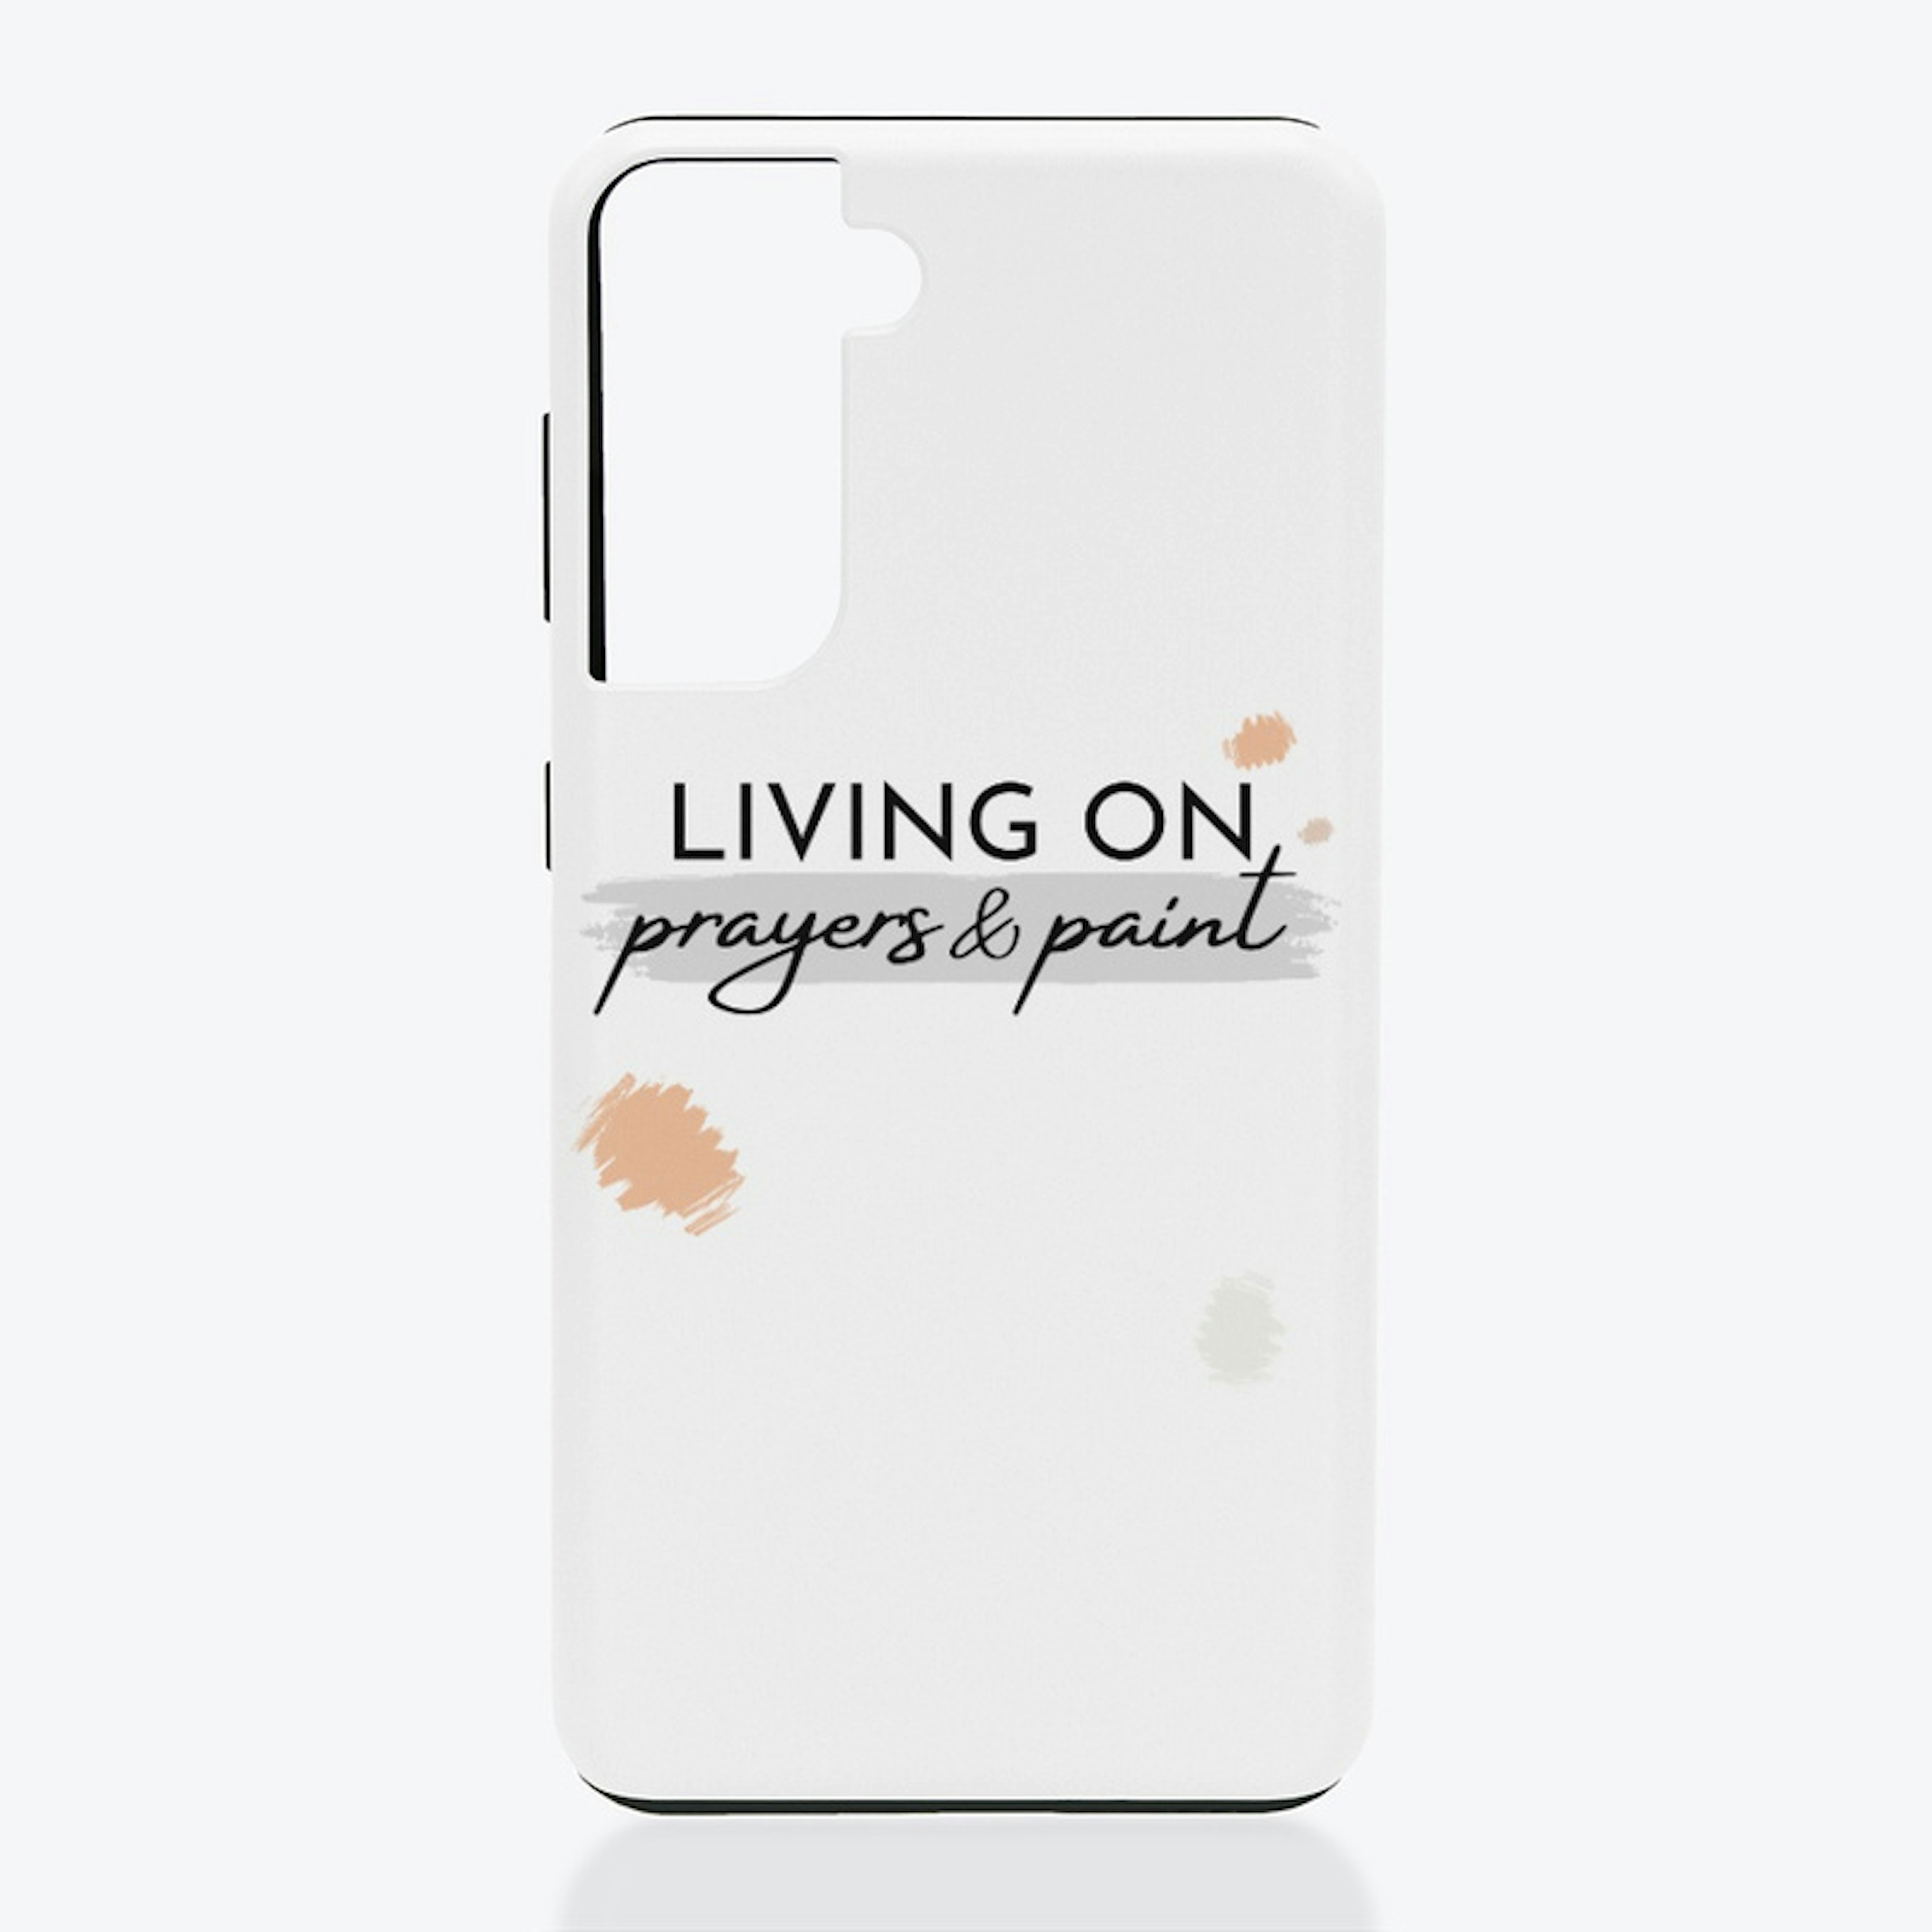 Living on: prayers & paint swag